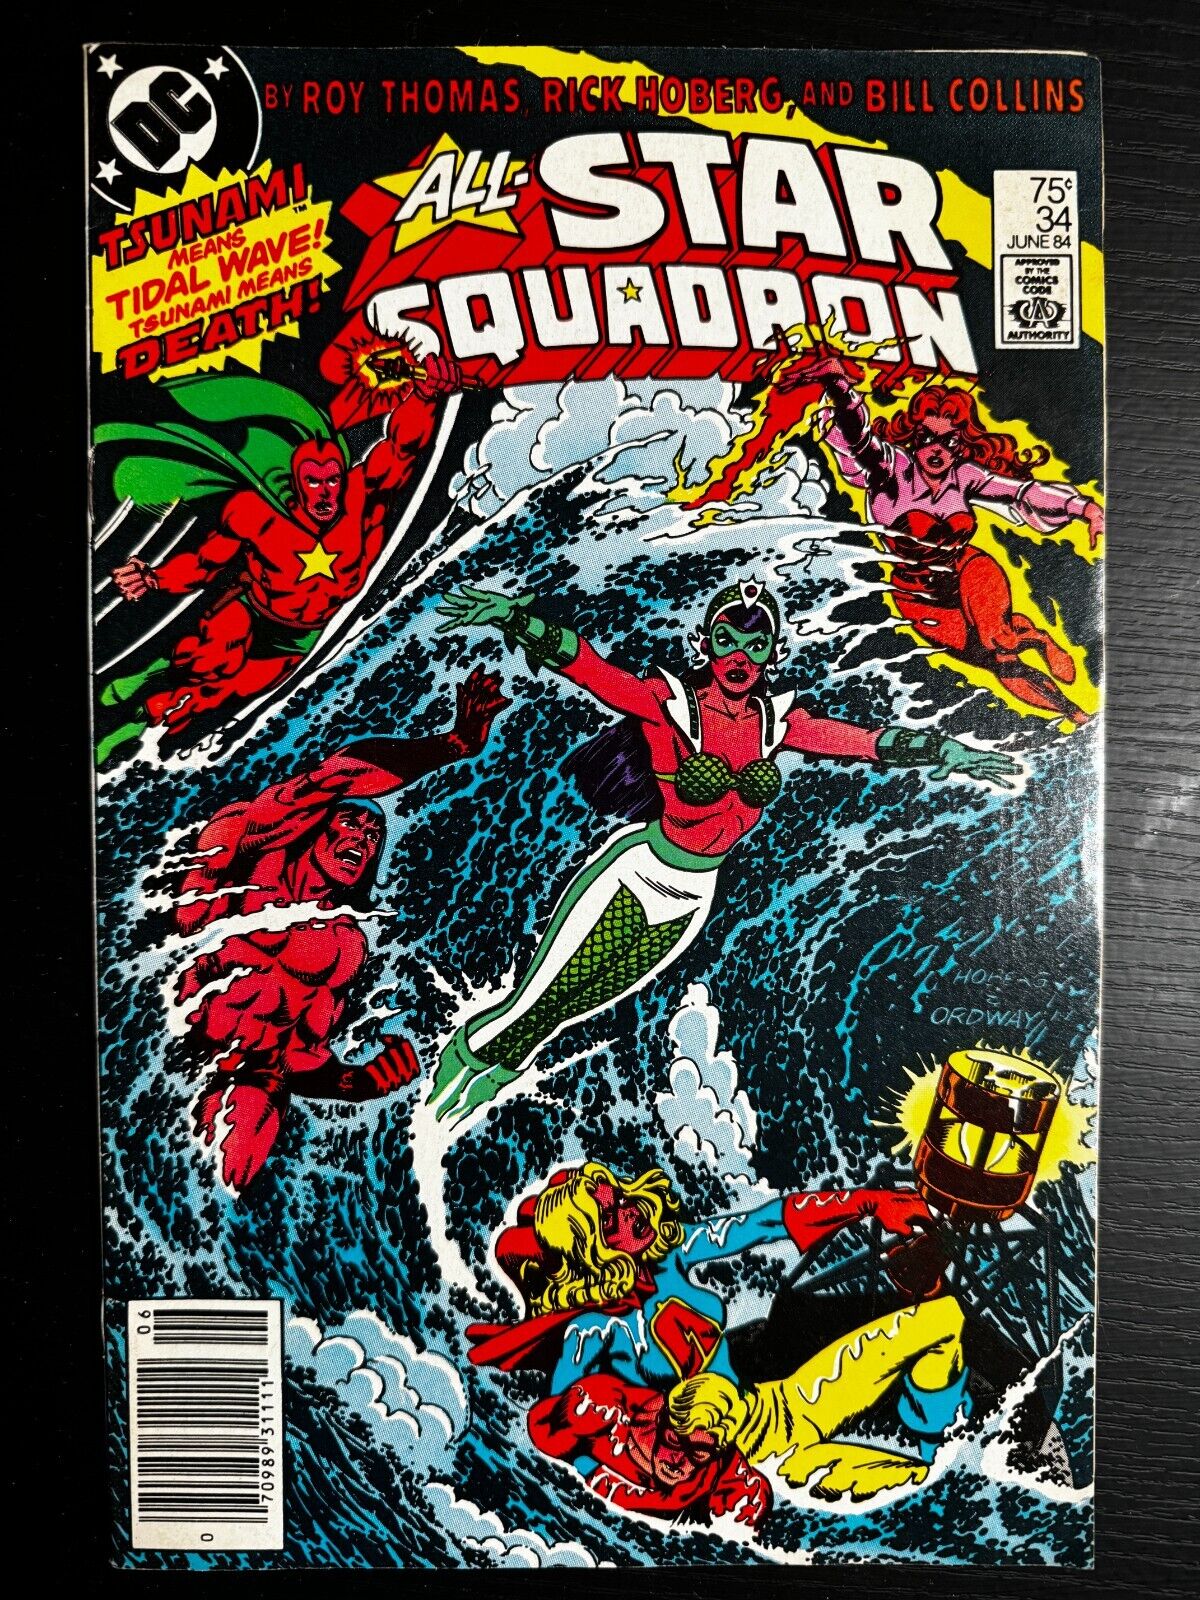 All-Star Squadron #34 (June 1984, DC) 